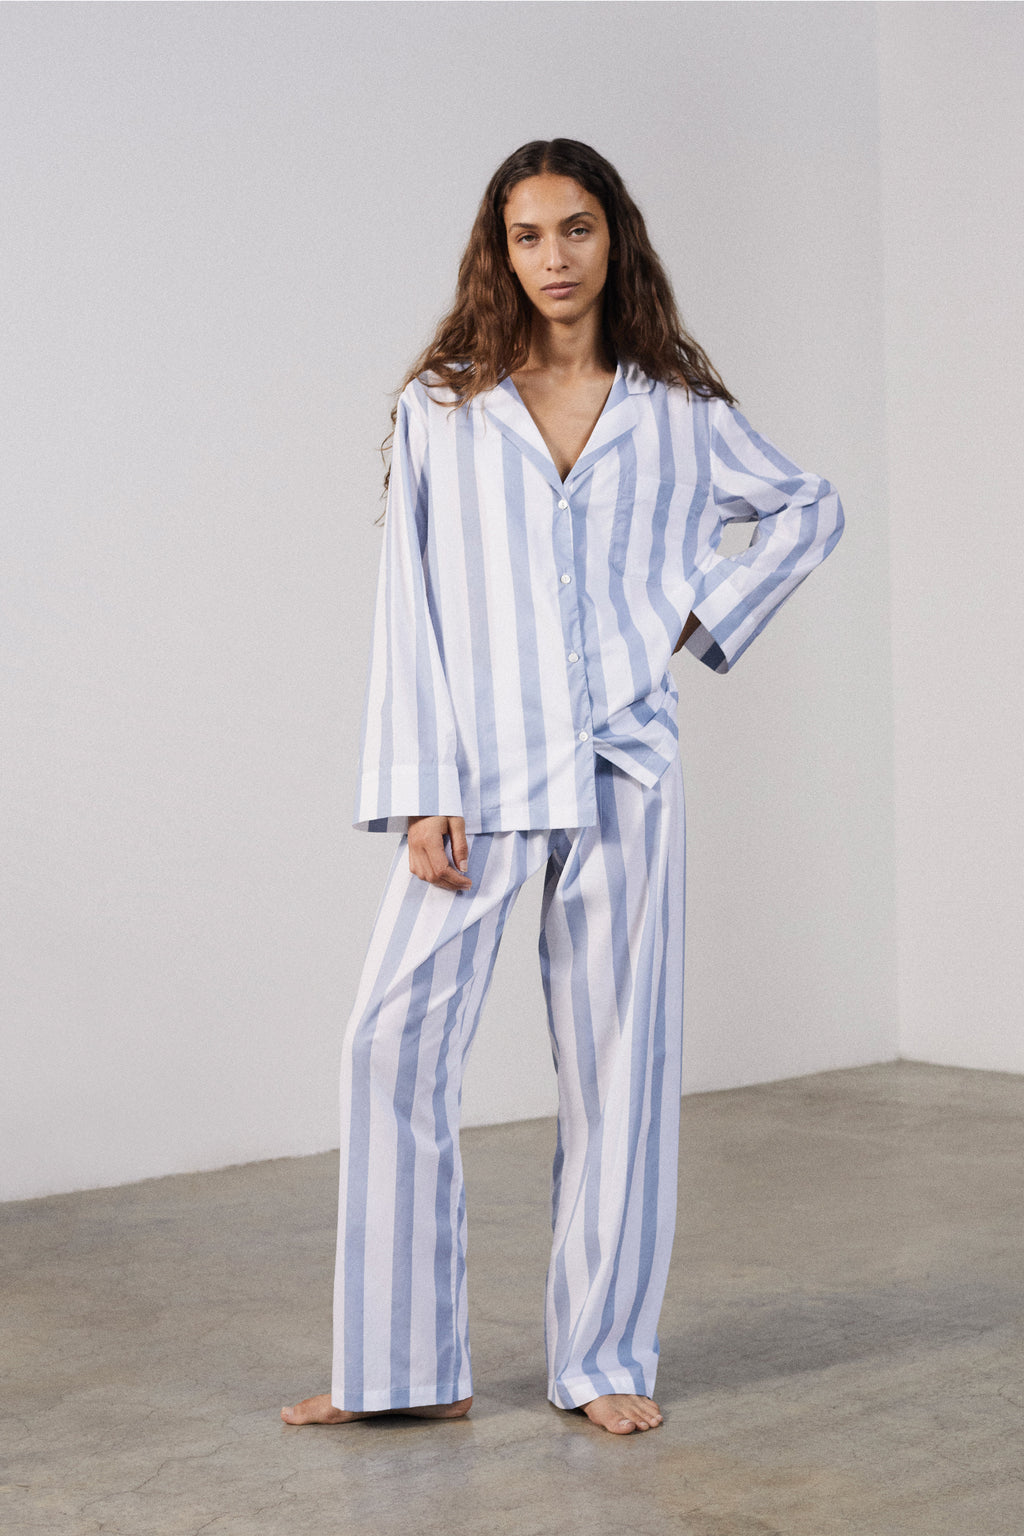 Pyjama Sets by HONNA - Luxury Organic Sleepwear for Women